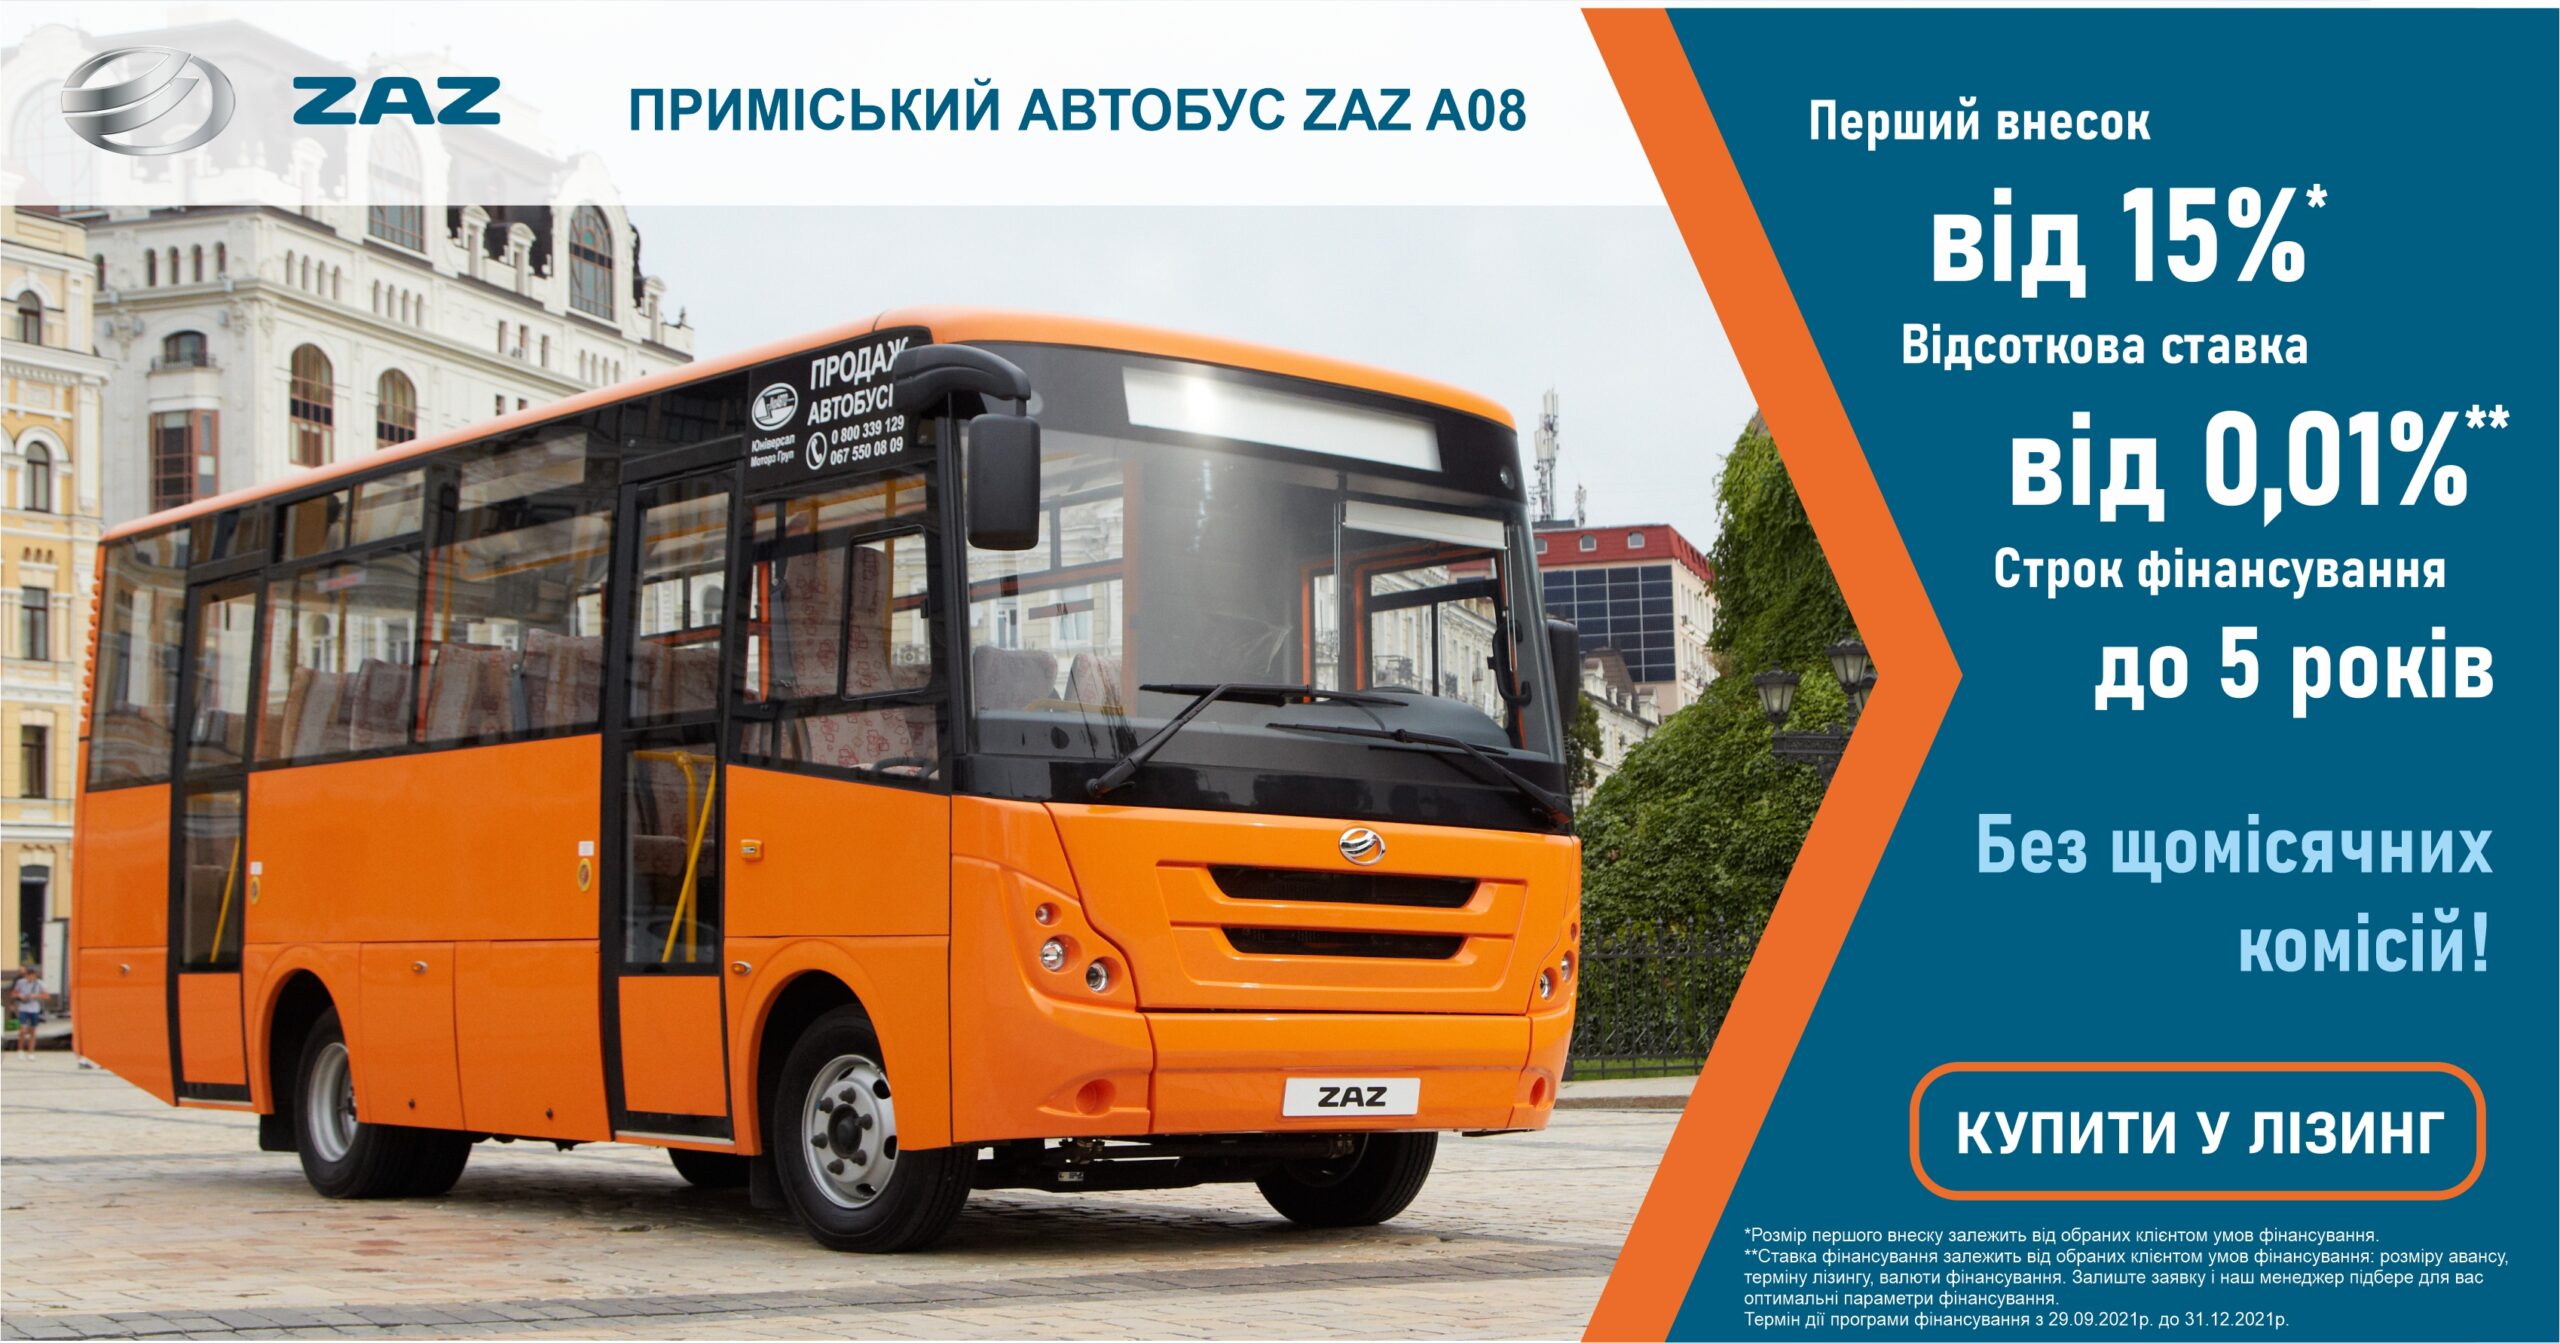 You are currently viewing Автобус ЗАЗ А08 у лізинг від 0,01%* річних